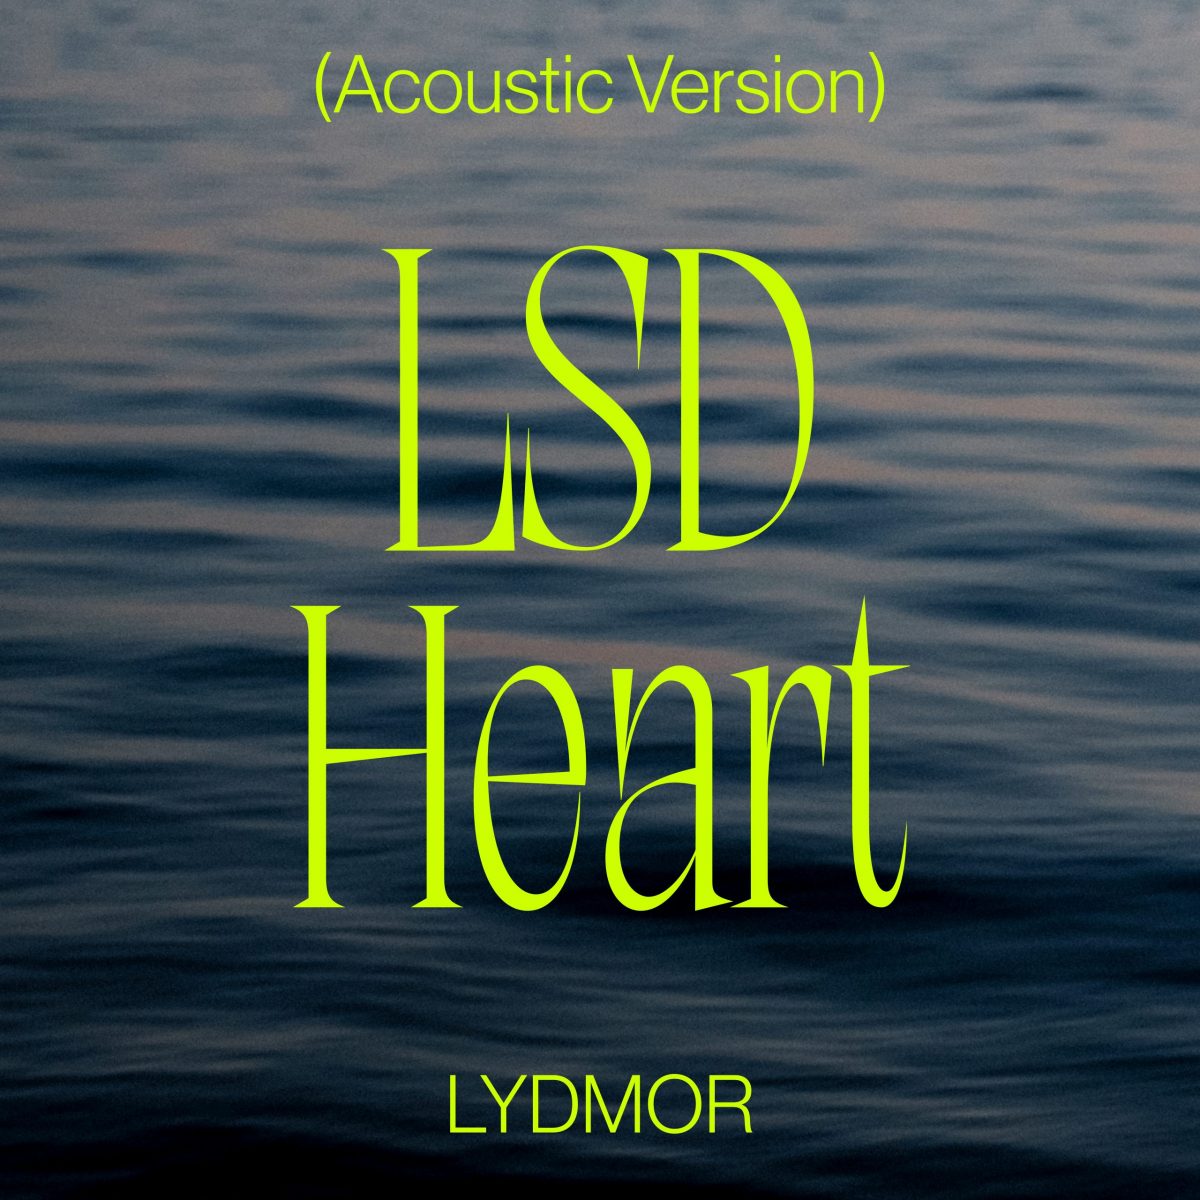 lydmor-veroeffentlicht-lsd-heart-acoustic-version-news